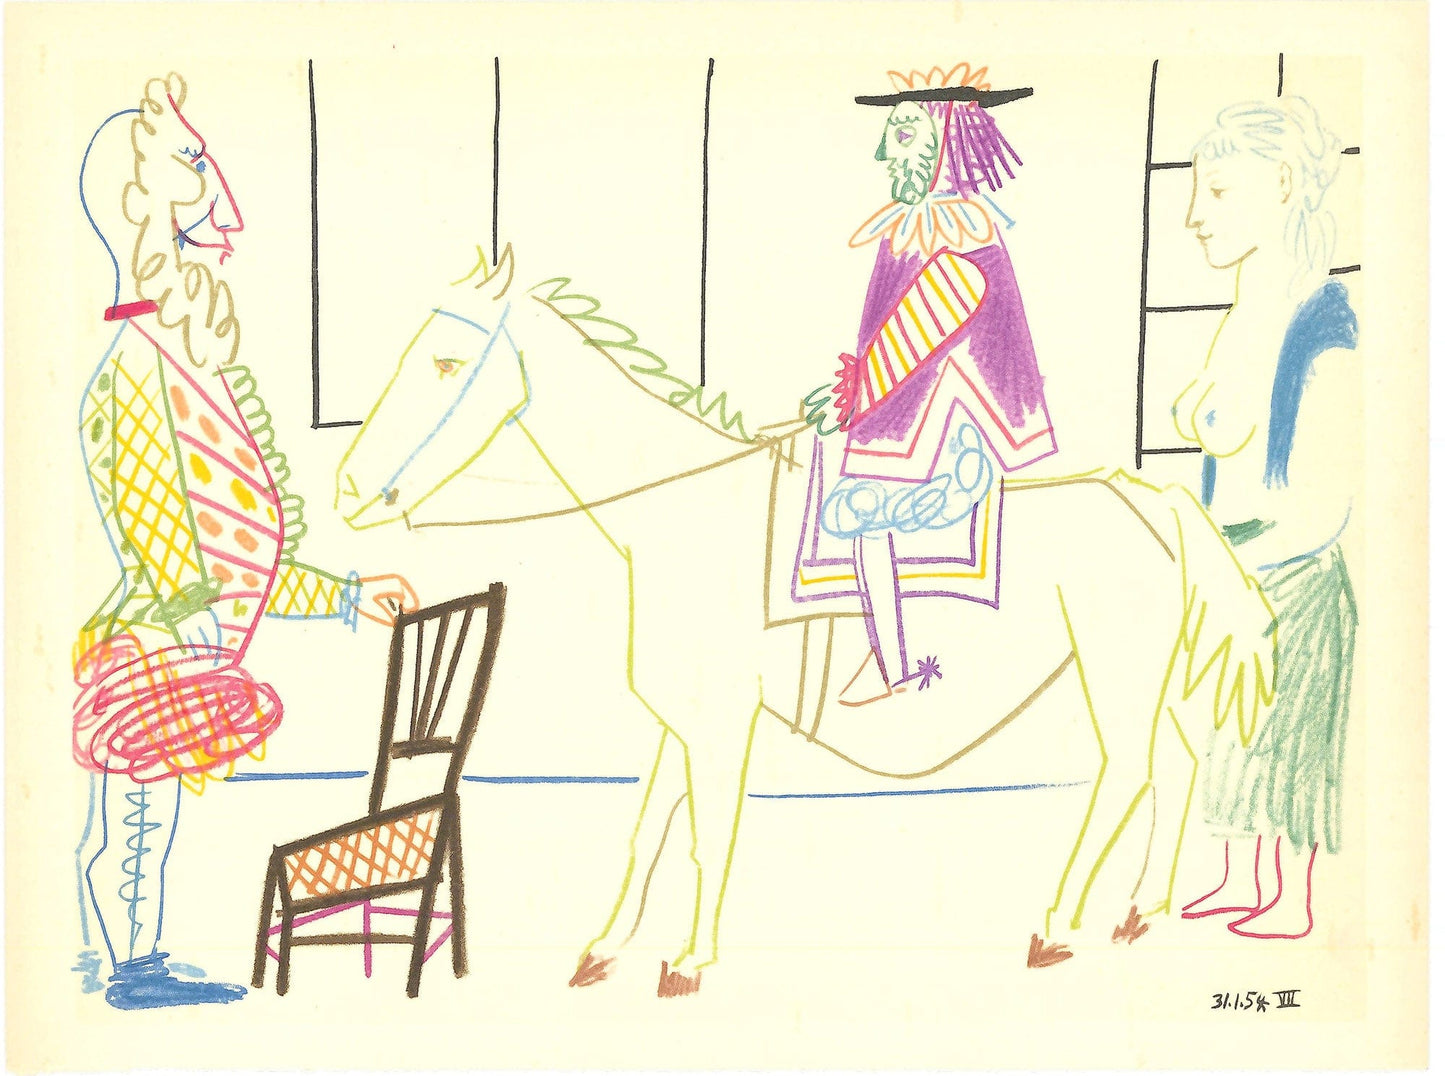 Pablo Picasso, "Human Comedy VIII"